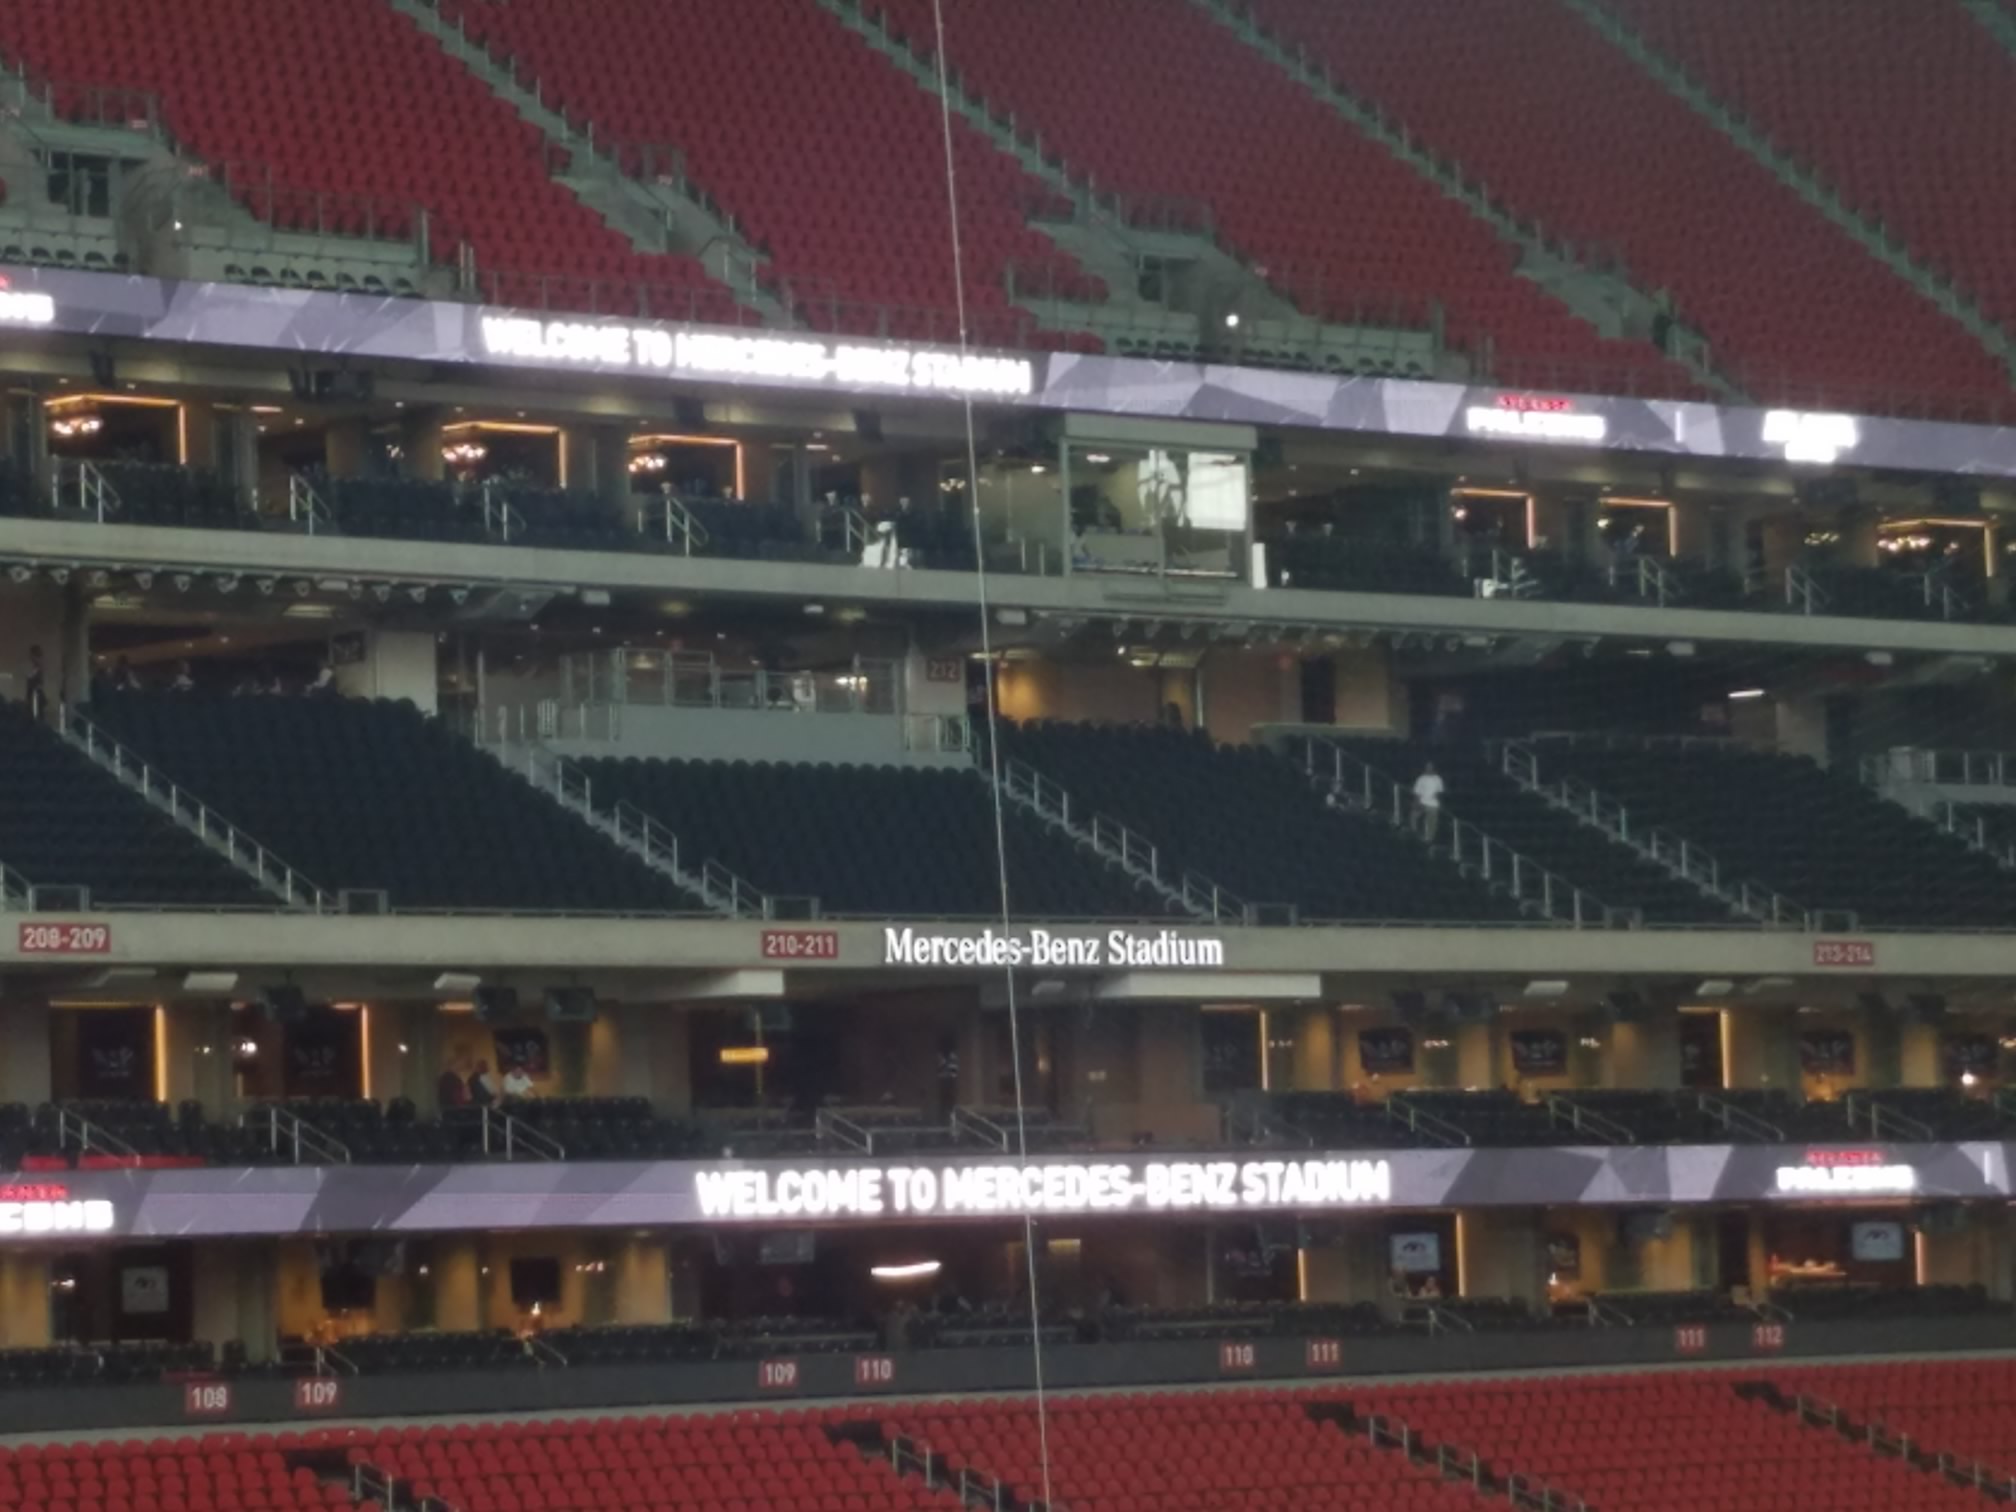 Atlanta Falcons Club Seating at Mercedes-Benz Stadium - RateYourSeats.com